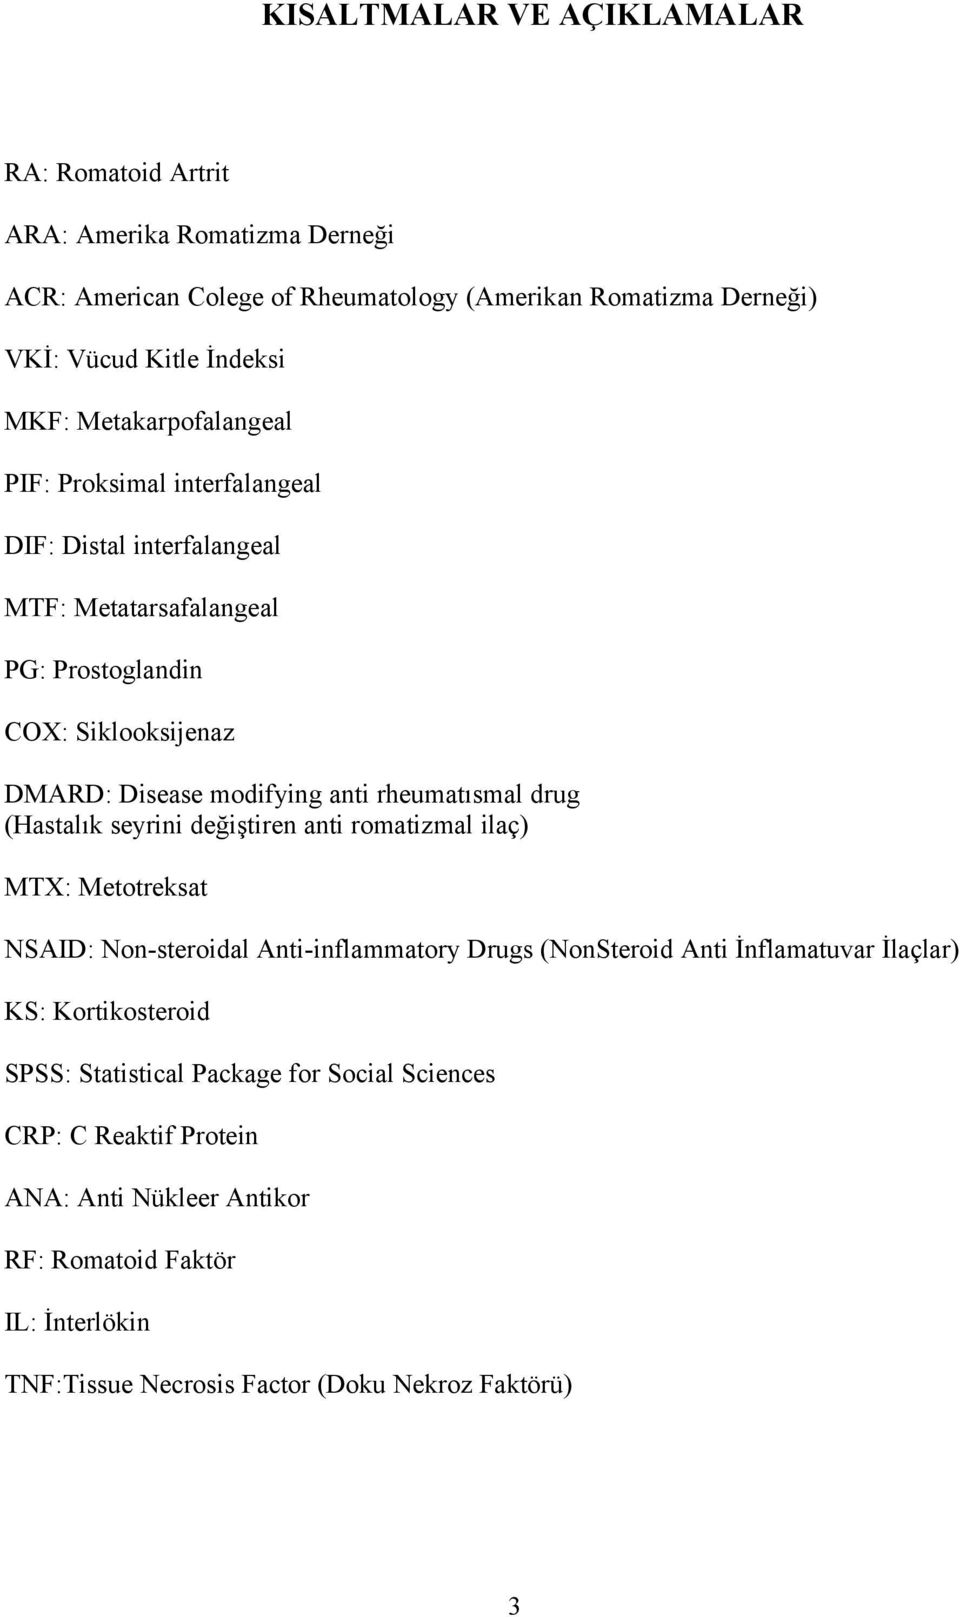 rheumatısmal drug (Hastalık seyrini değiştiren anti romatizmal ilaç) MTX: Metotreksat NSAID: Non-steroidal Anti-inflammatory Drugs (NonSteroid Anti İnflamatuvar İlaçlar) KS: